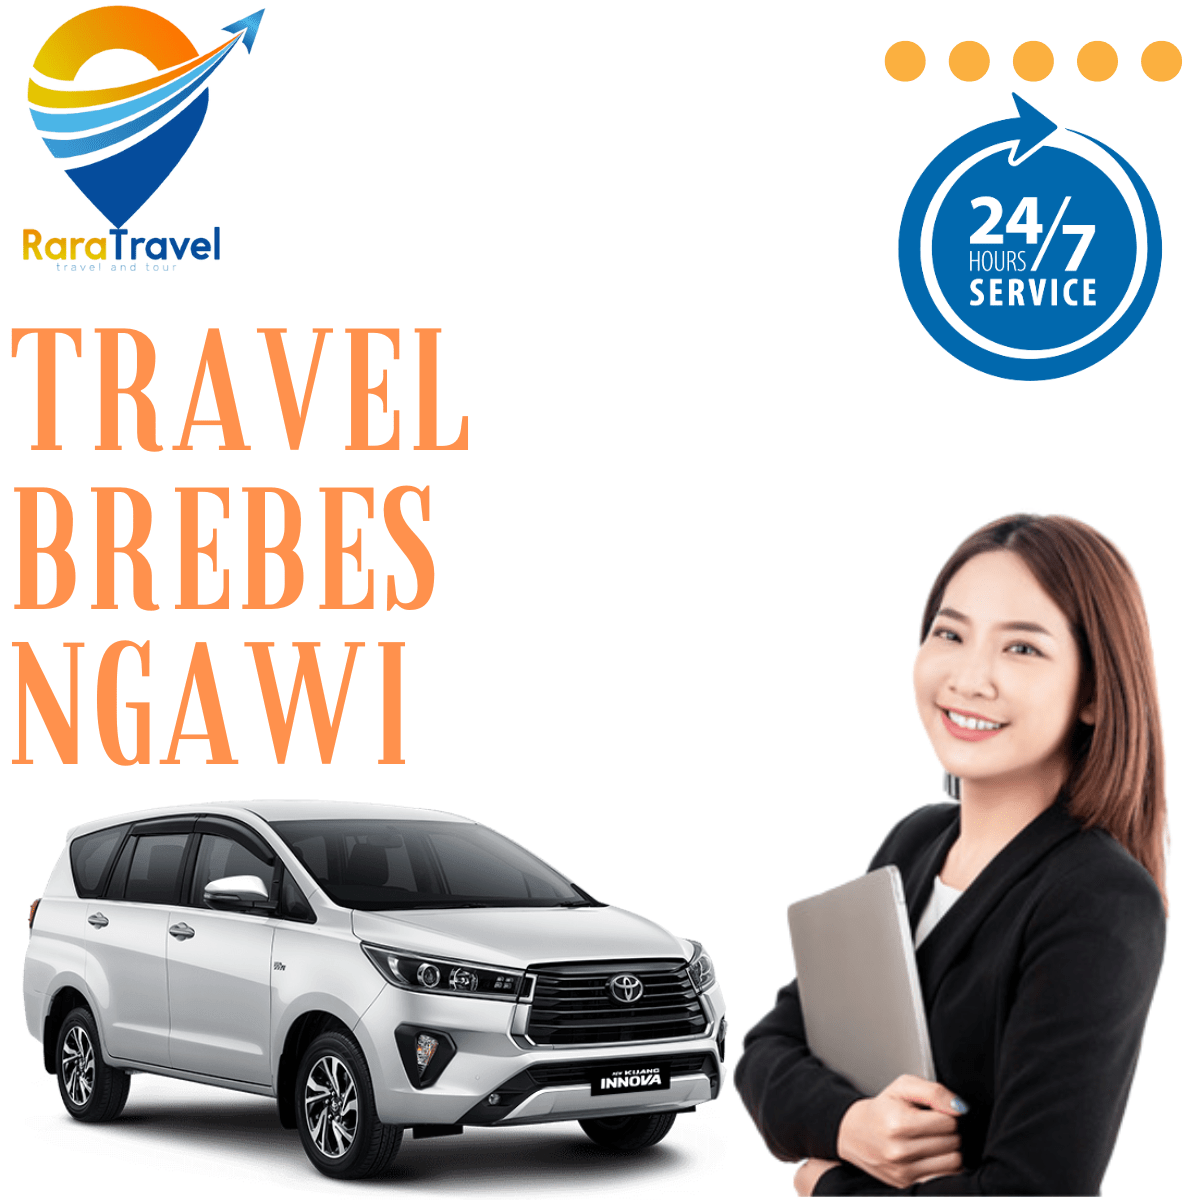 Travel Brebes Ngawi - Rara Travel & Tours